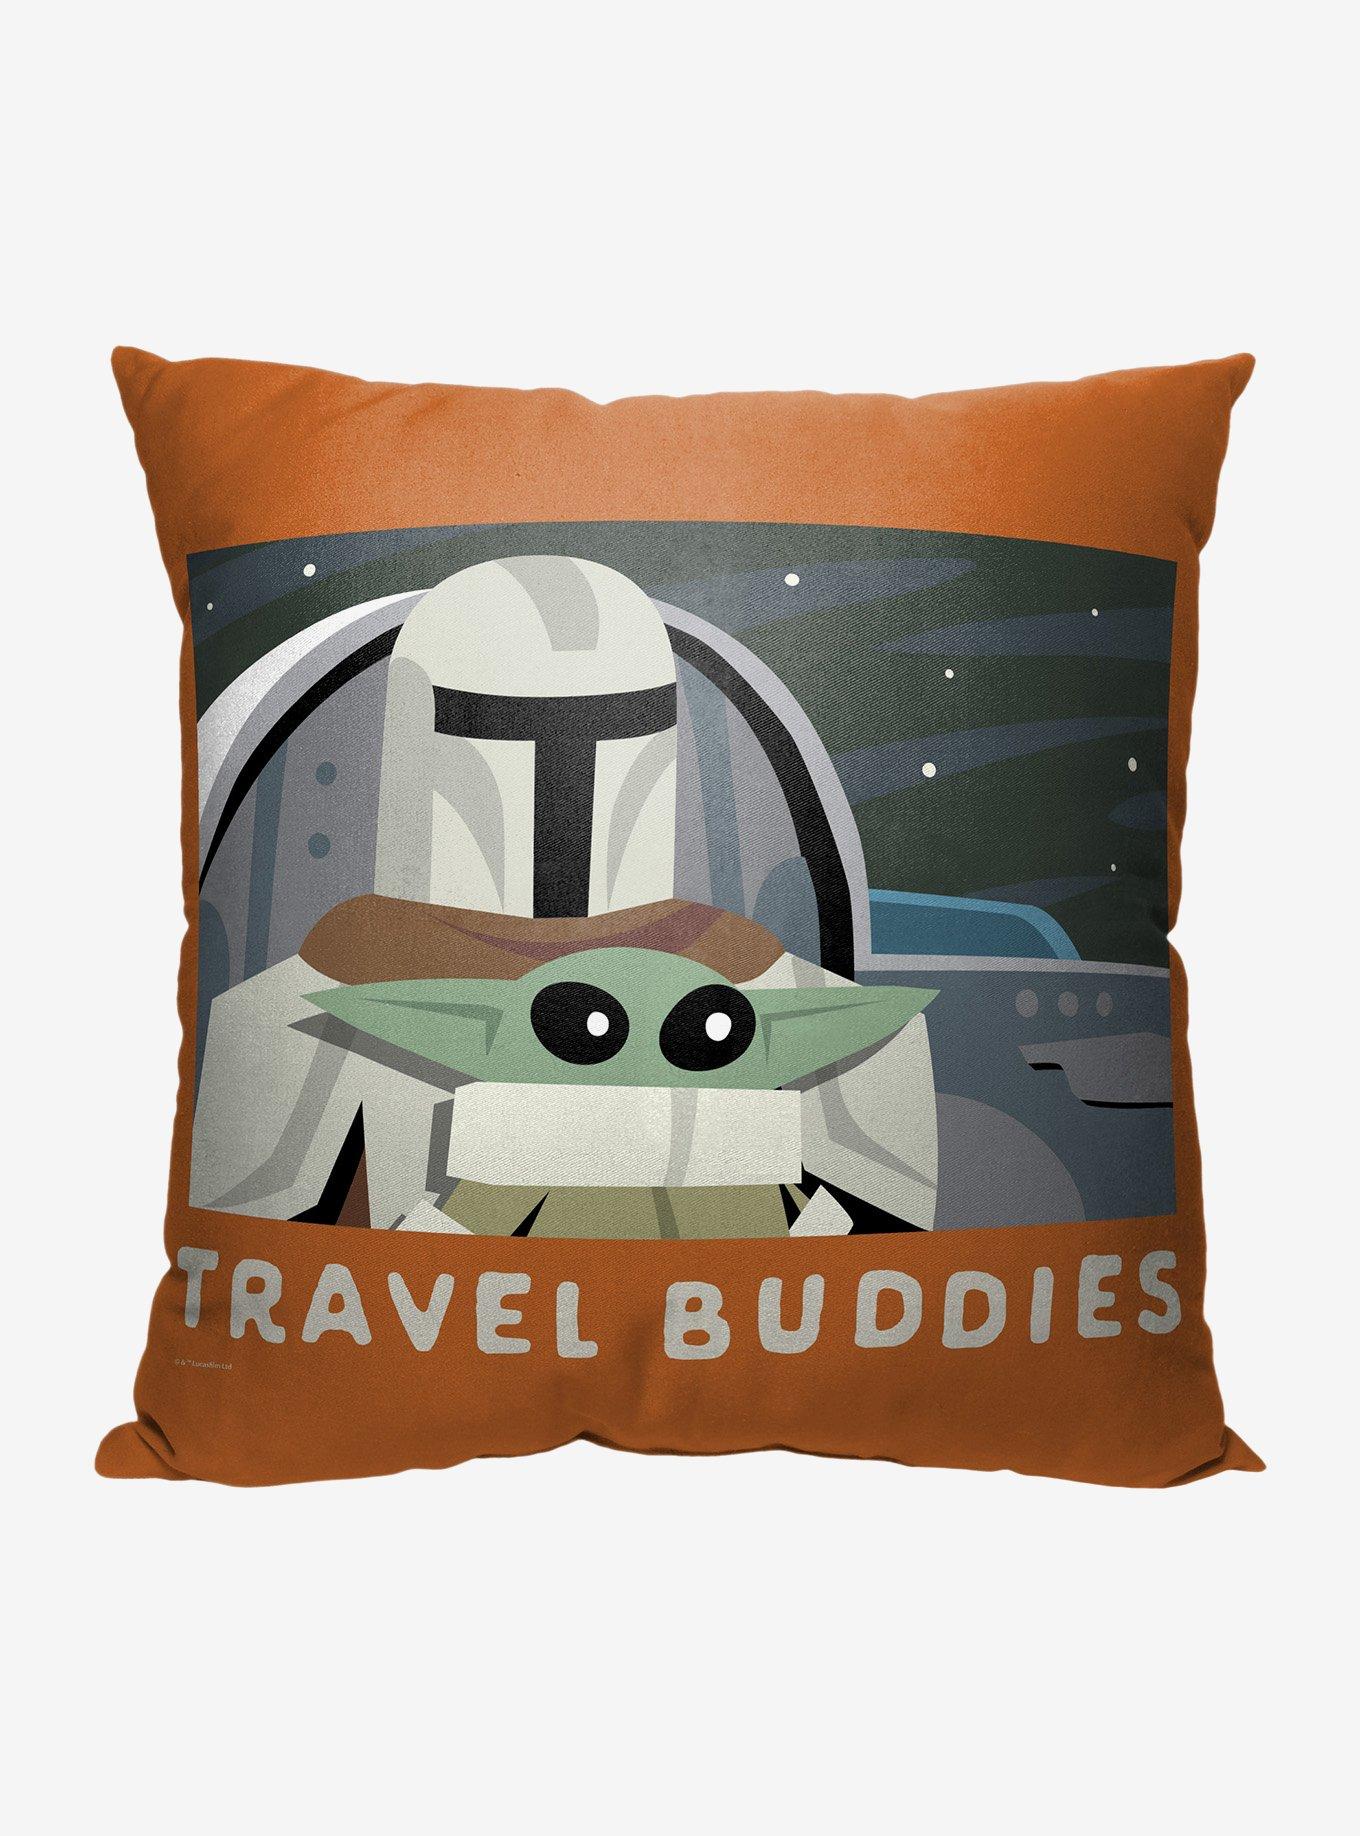 Star Wars The Mandalorian Traveling Buddies Printed Pillow